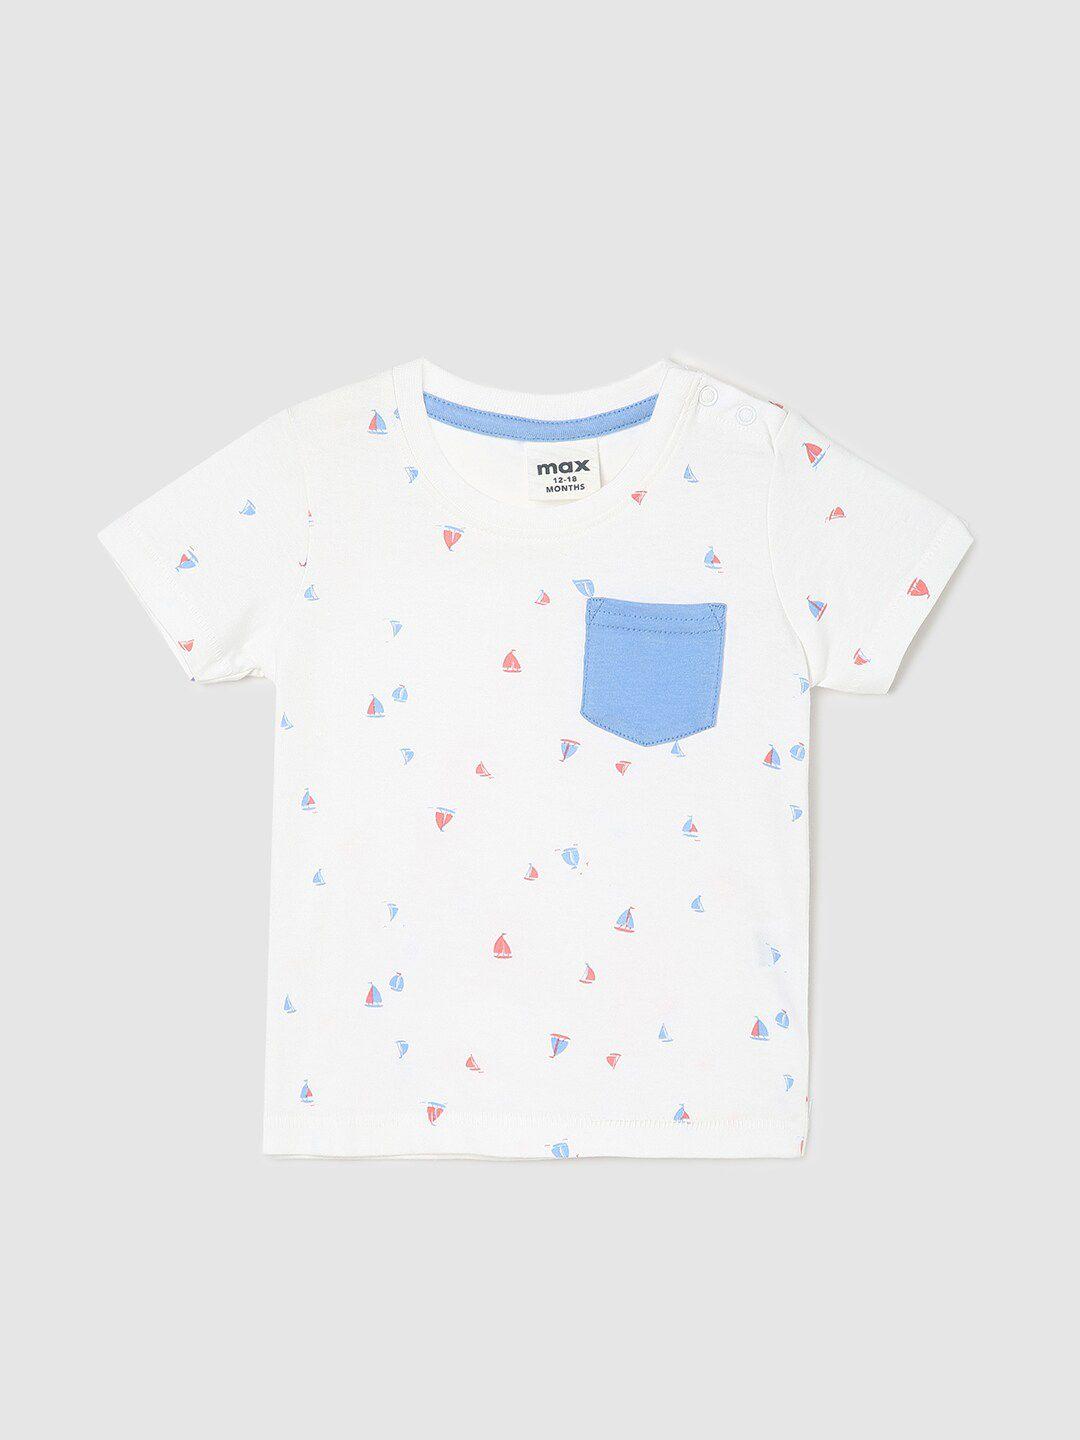 max-infants-boys-printed-pure-cotton-t-shirt